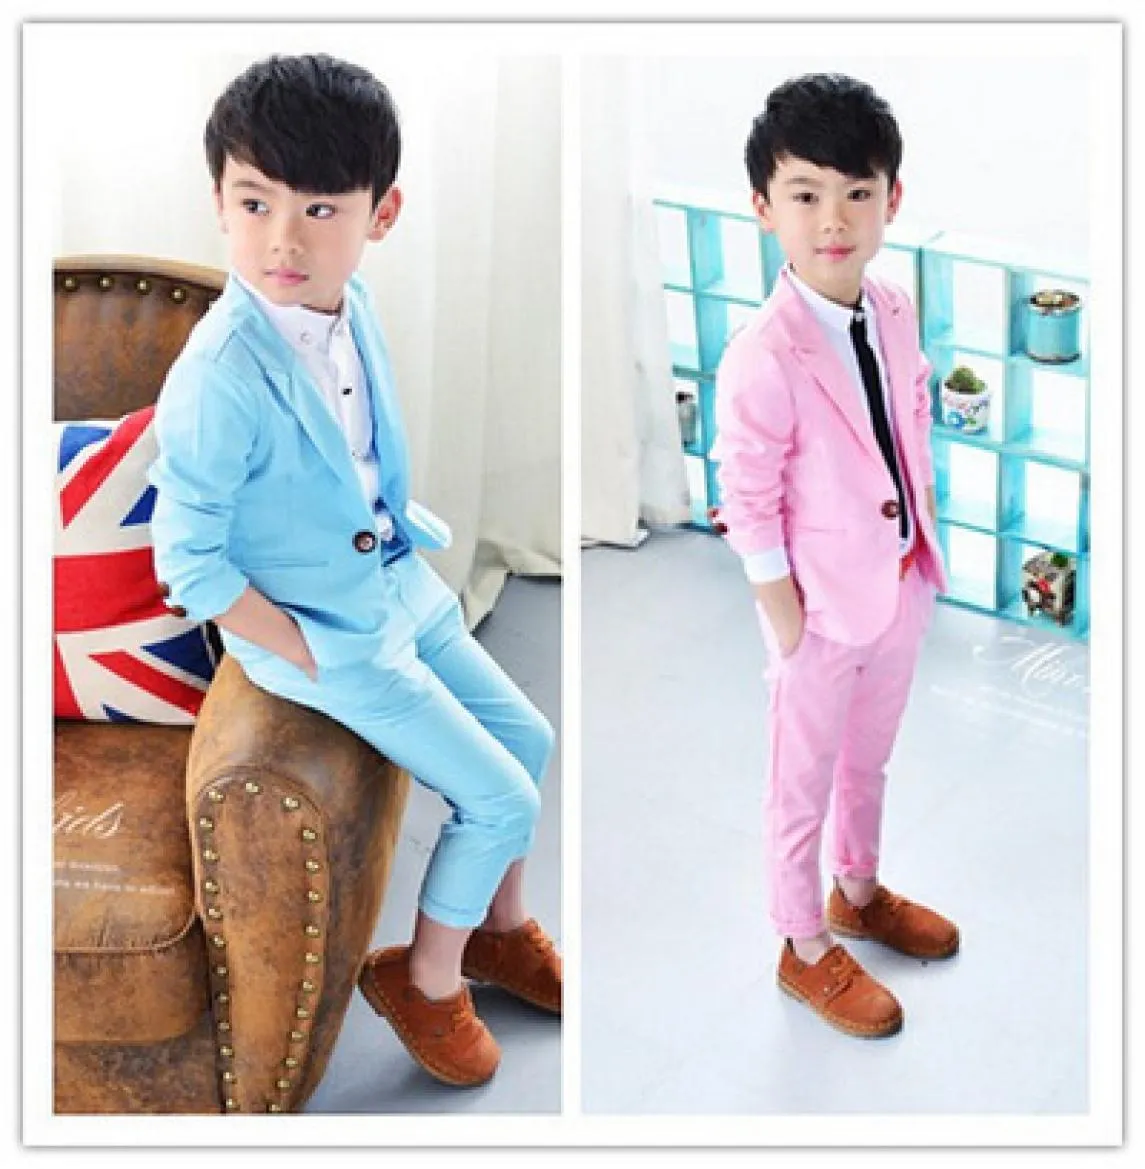 European Casual Boy Suit New Childrens Dress Twopiece Boy Vest Suit Gentleman Suit Mer Style in the Shop Pick2560650